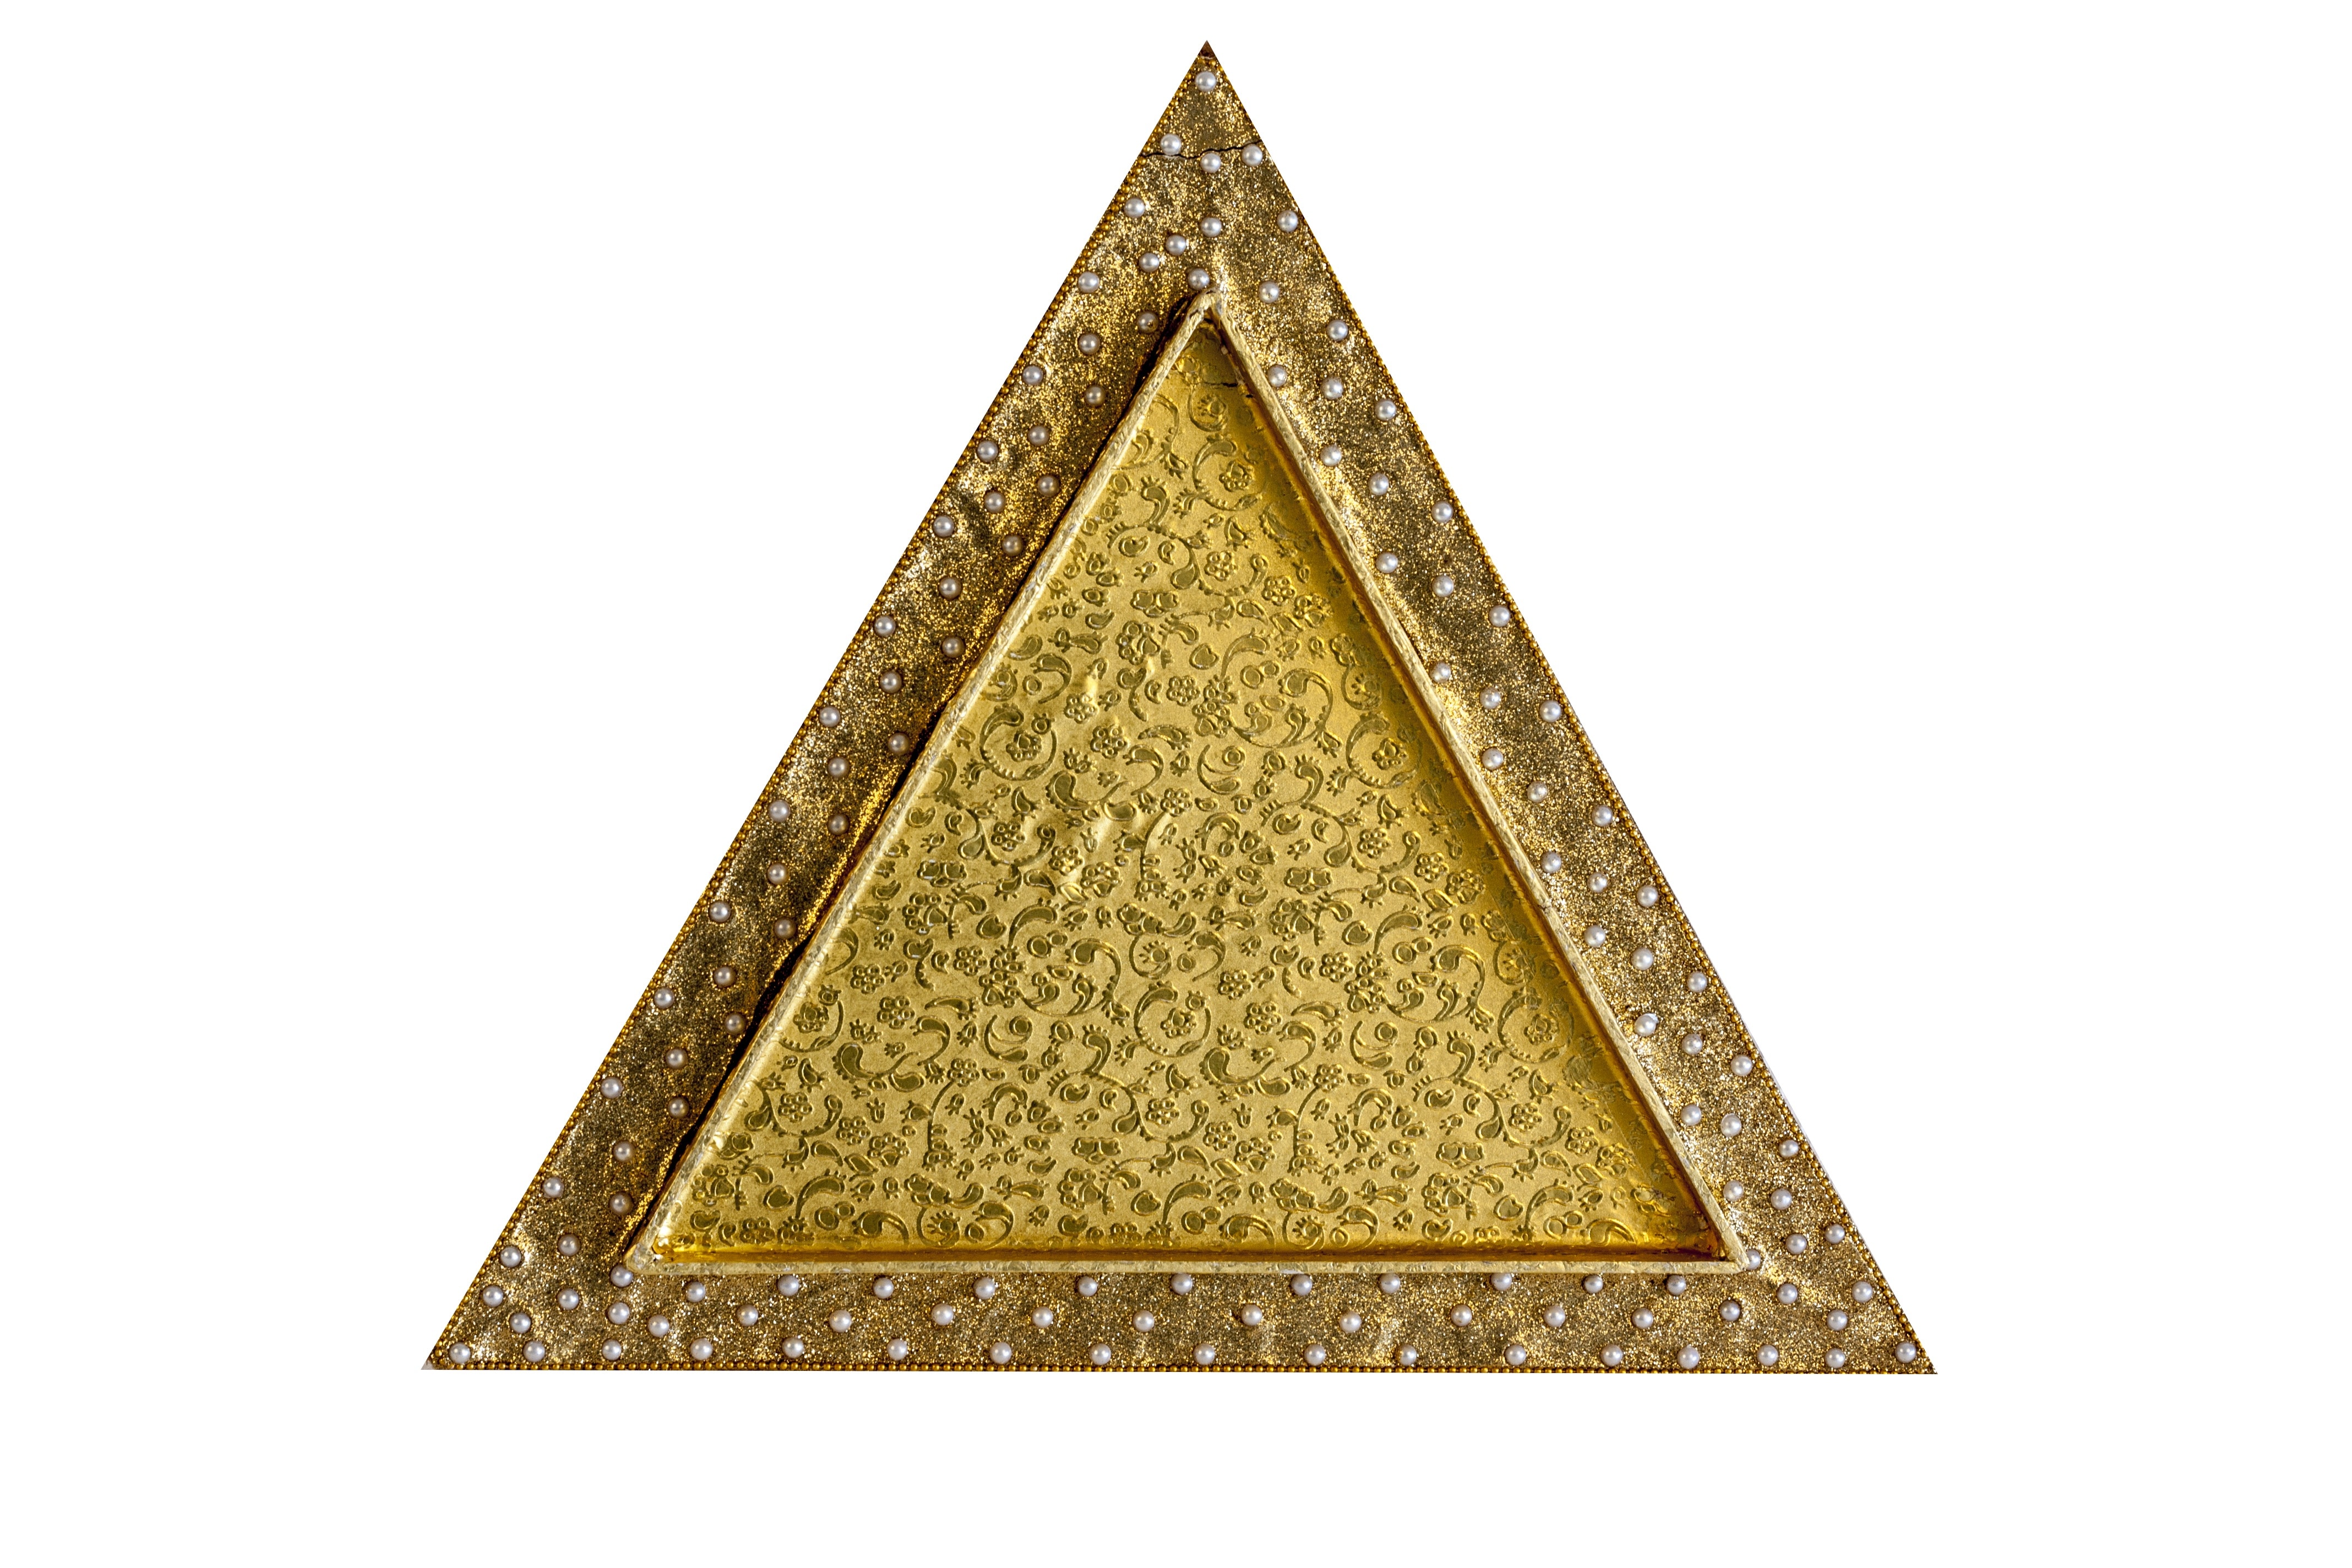 Triangular, Tray, Restaurant, Decorative, triangle shape, single object